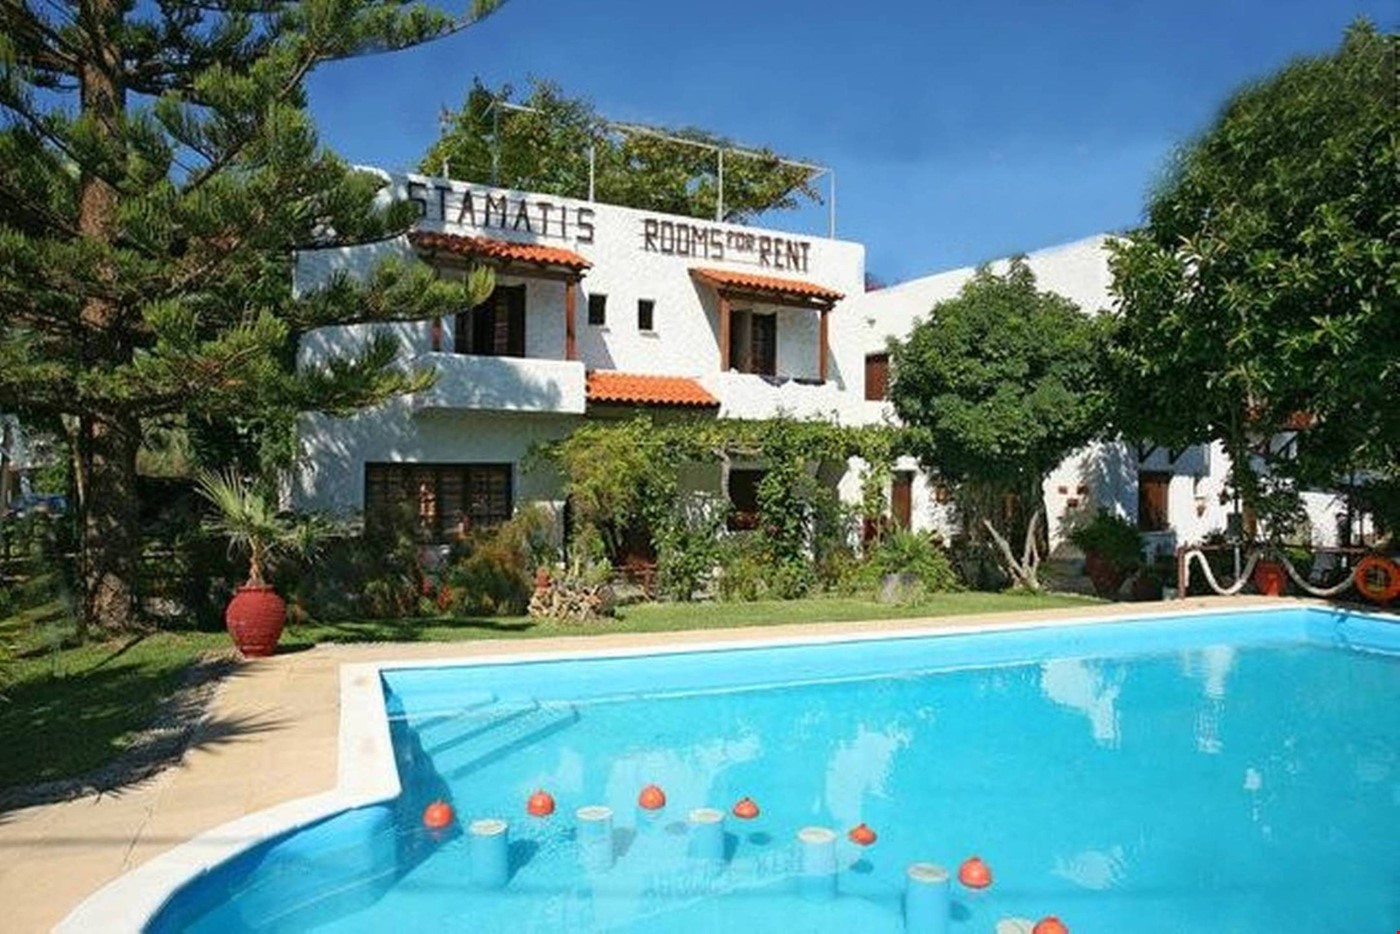 Hotel Pirgos Psilonerou Greece nomad remote 16964444-0cdd-449b-a780-98c81ab7230c_Front View 19.jpg